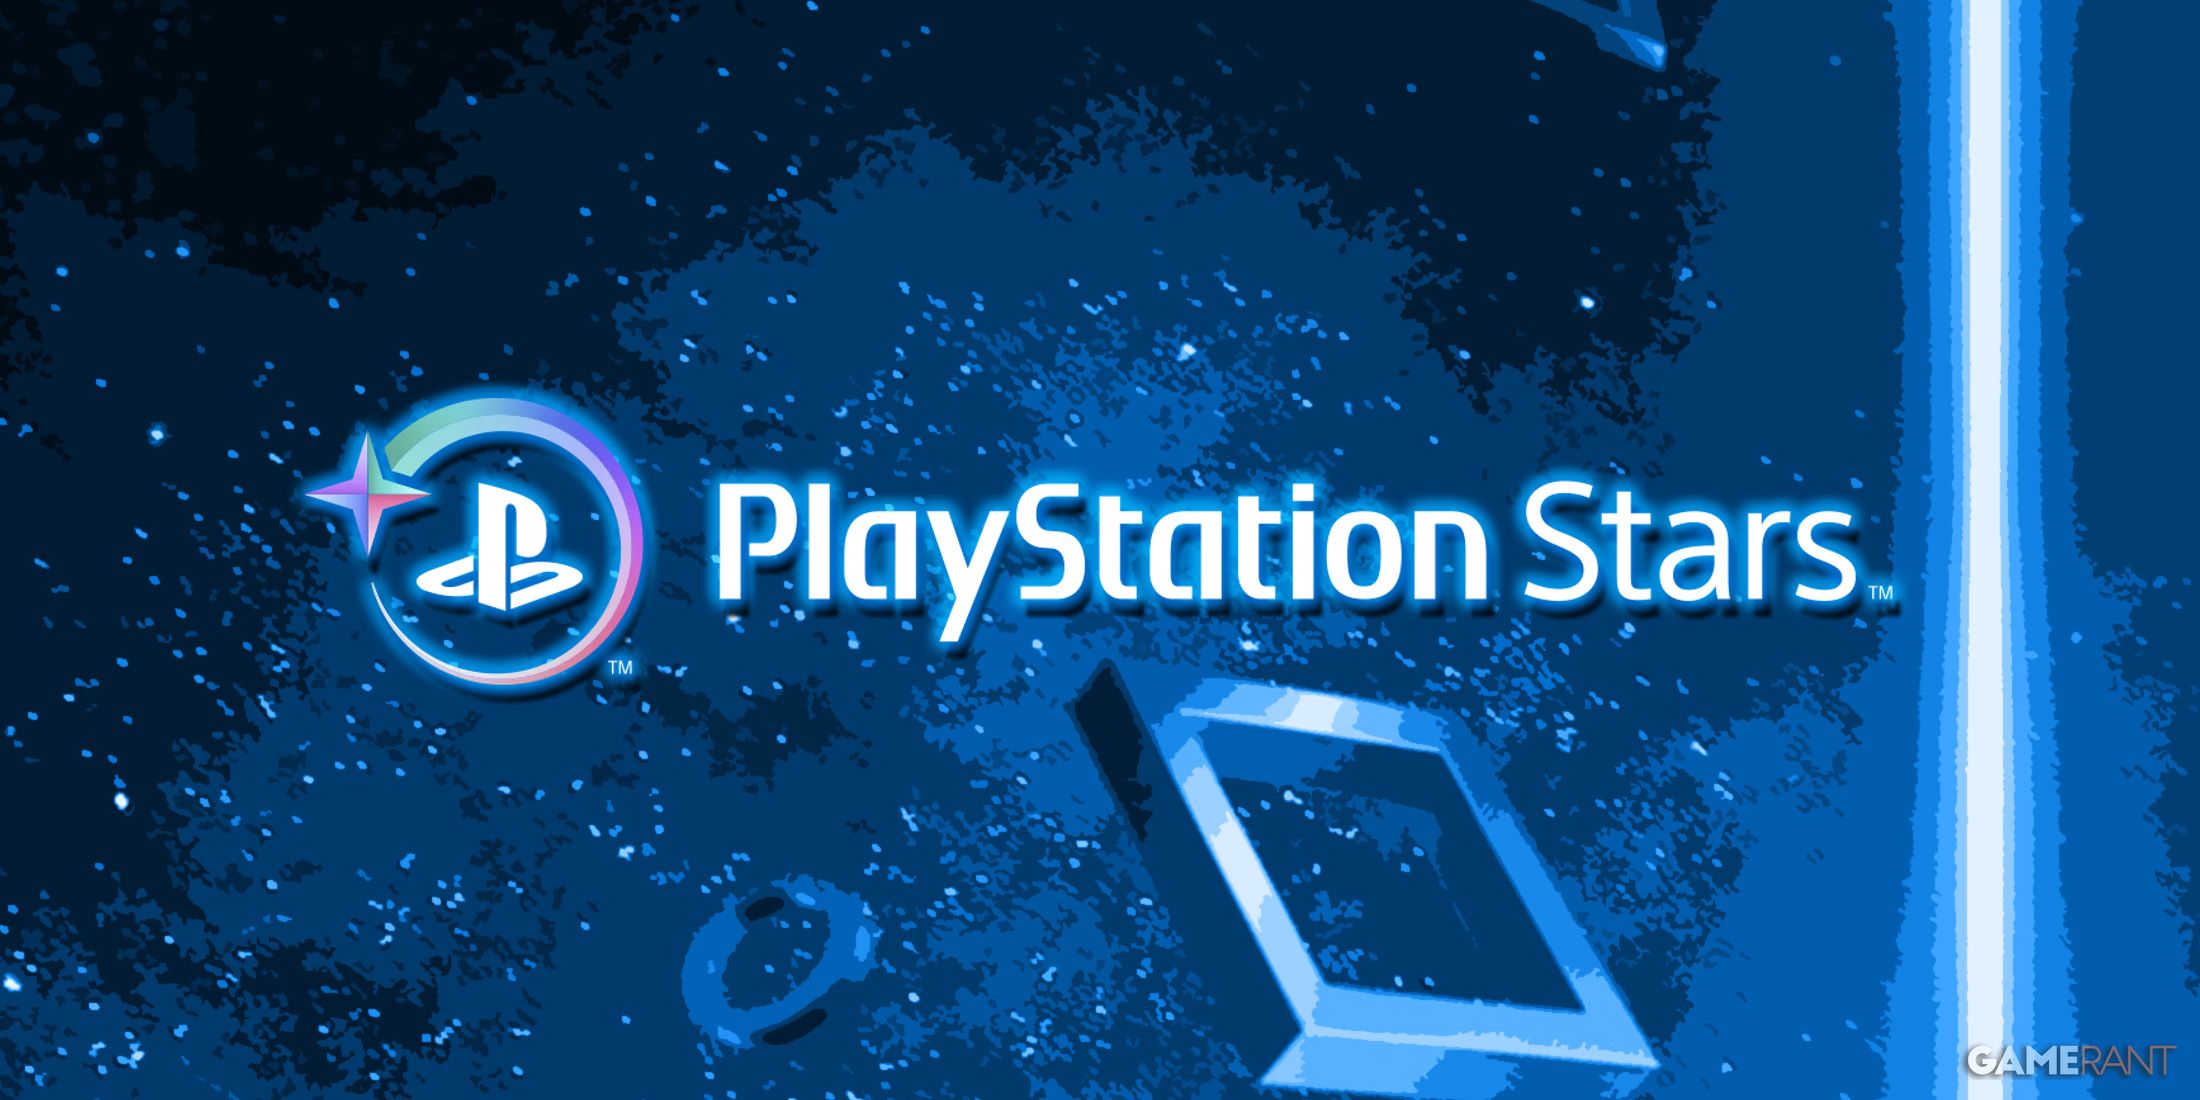 PlayStation Stars logo on cutout posterized background